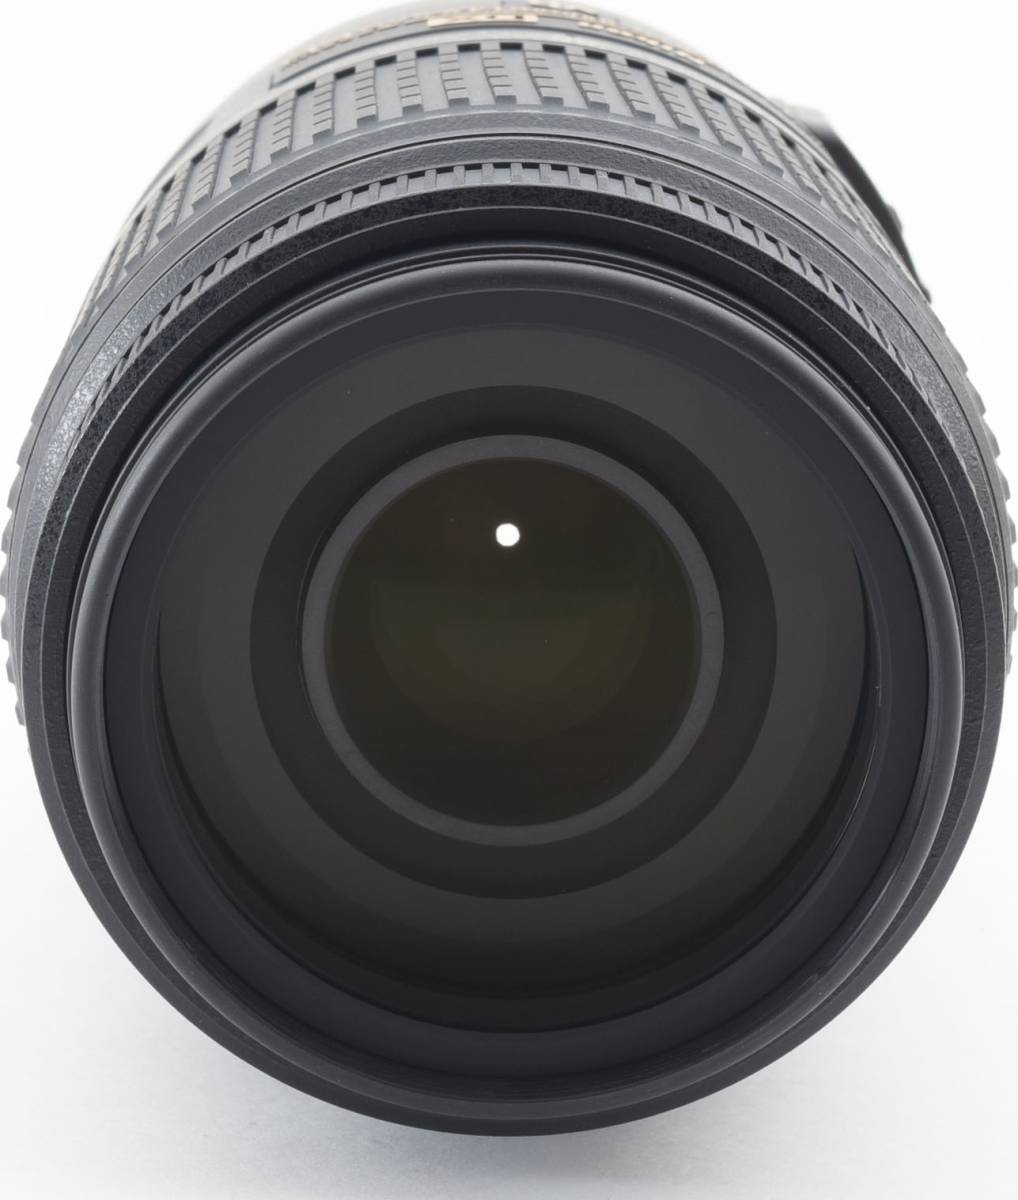 B09/5513B★極美品★ニコン Nikon AF-S 55-300mm F4.5-5.6G ED VR_画像4